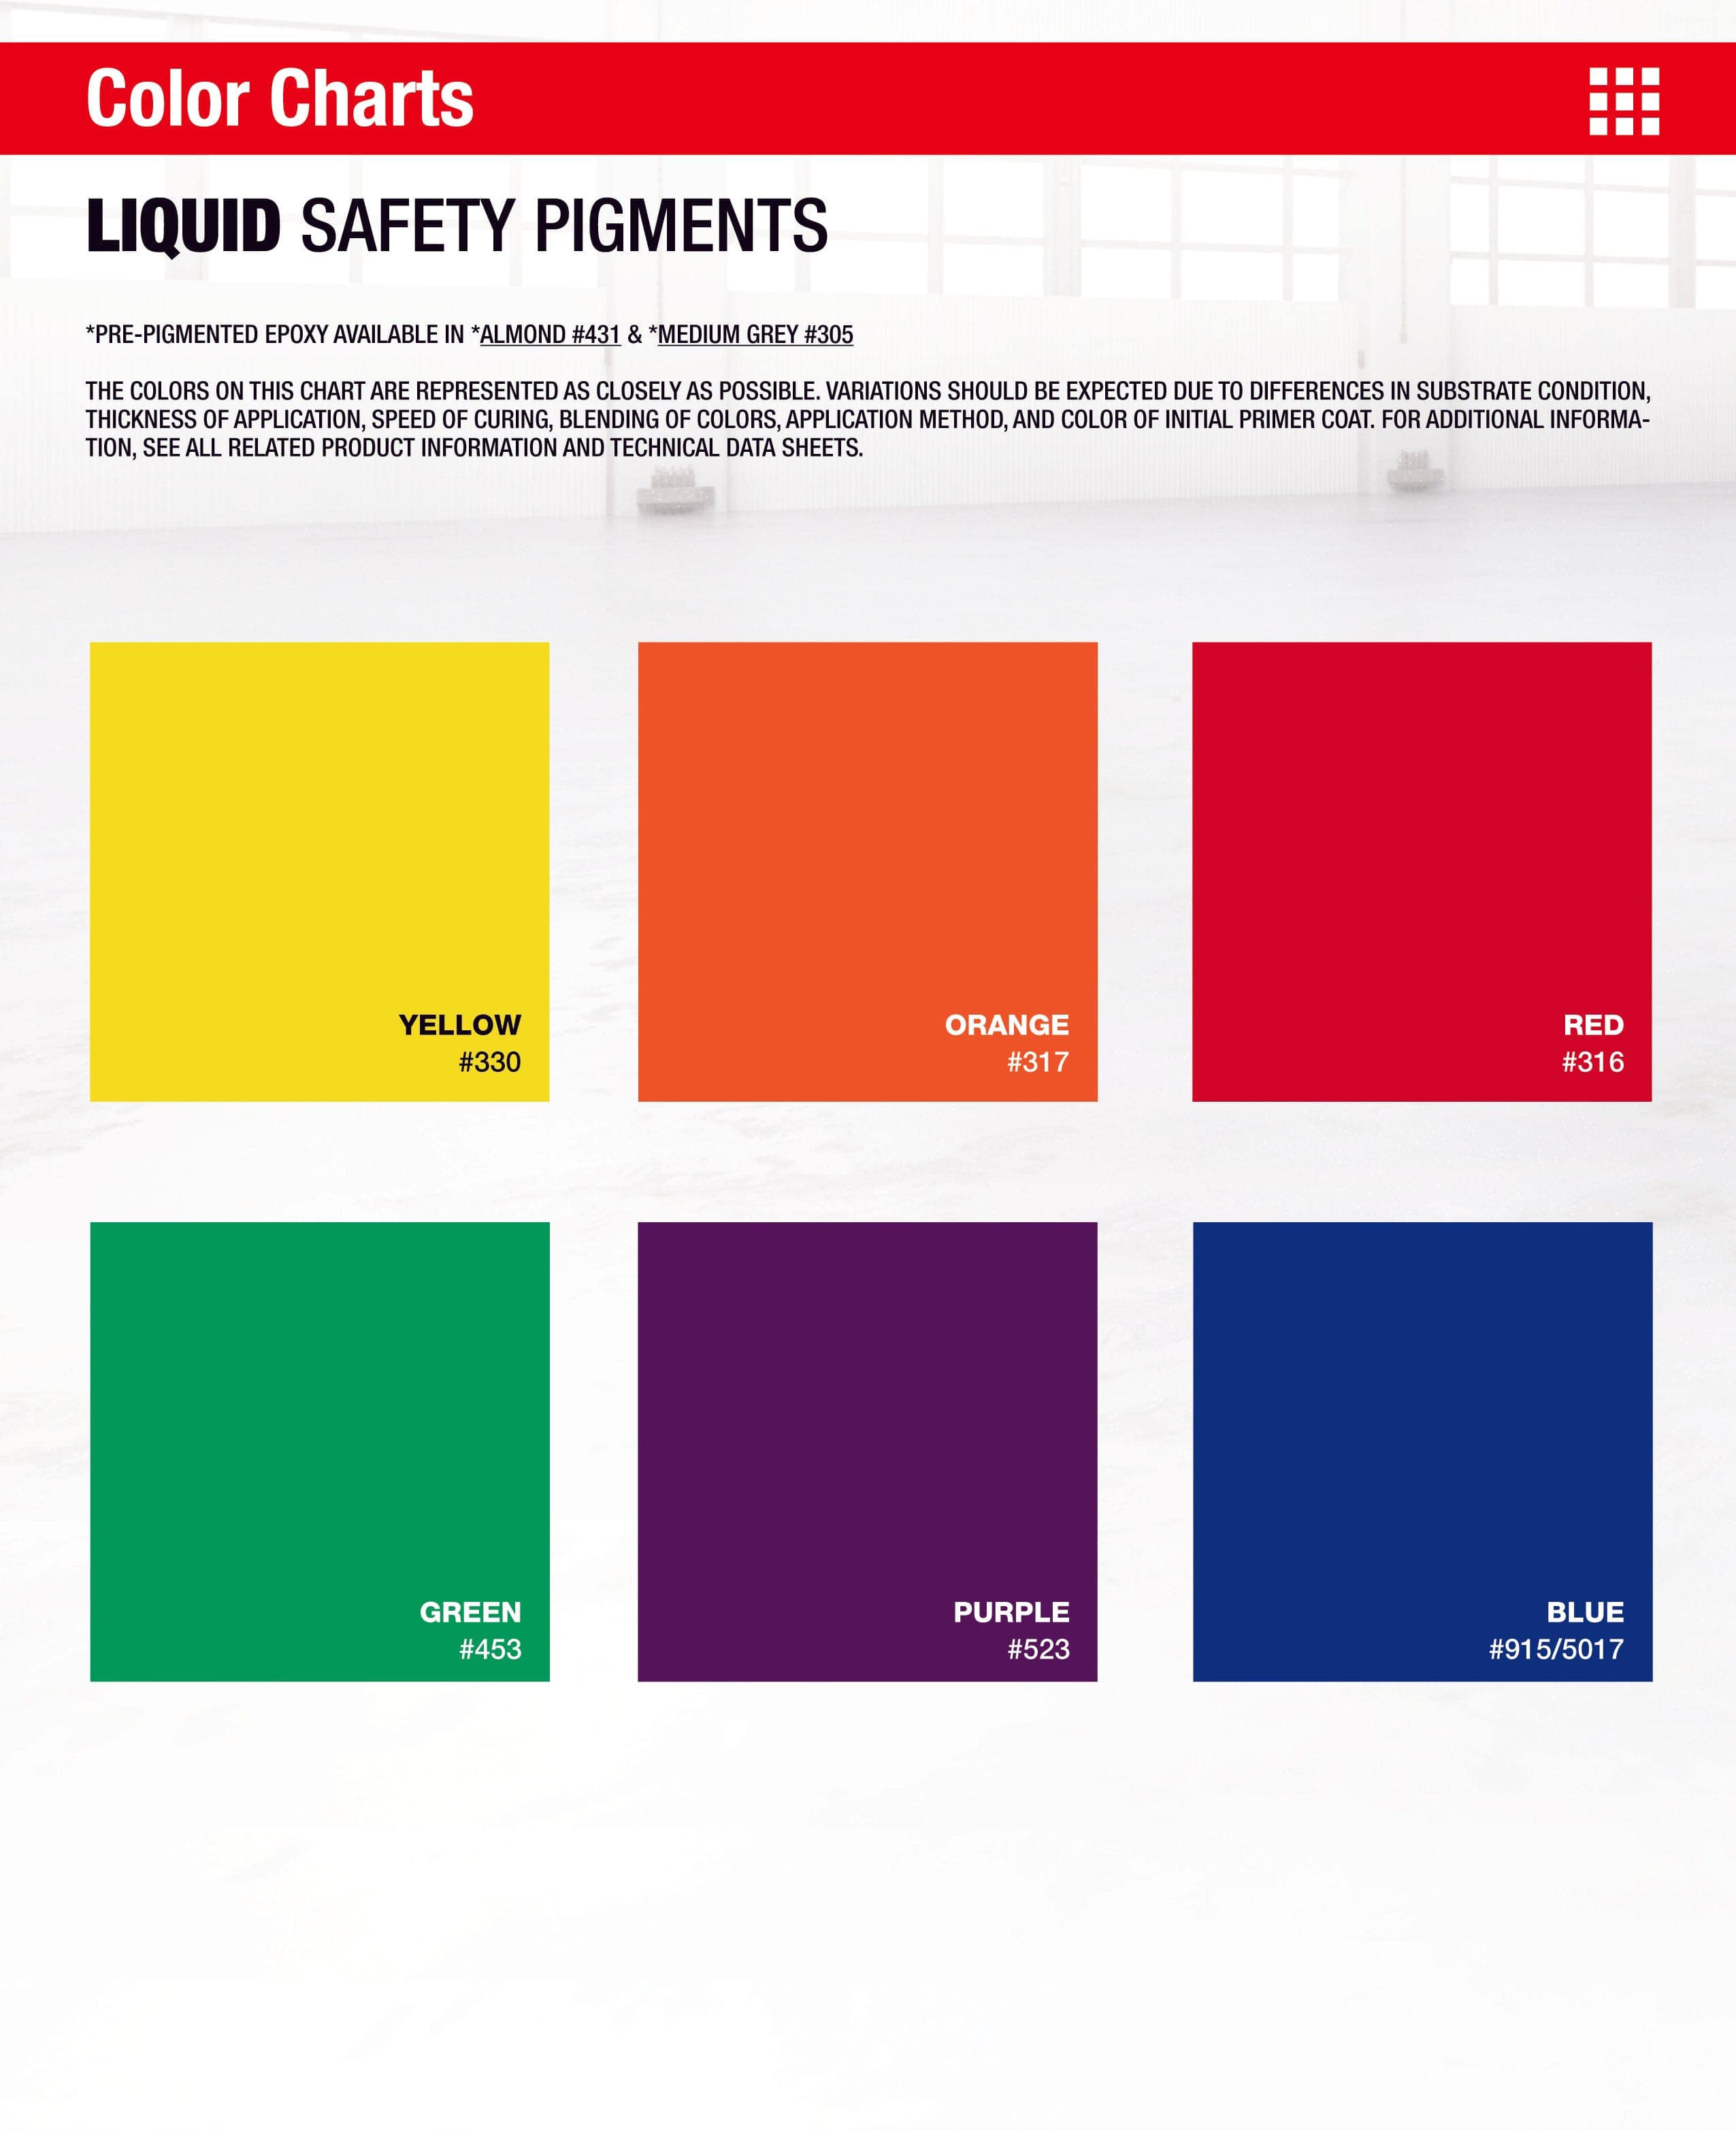 Liquid Safety Pigments Color Charts